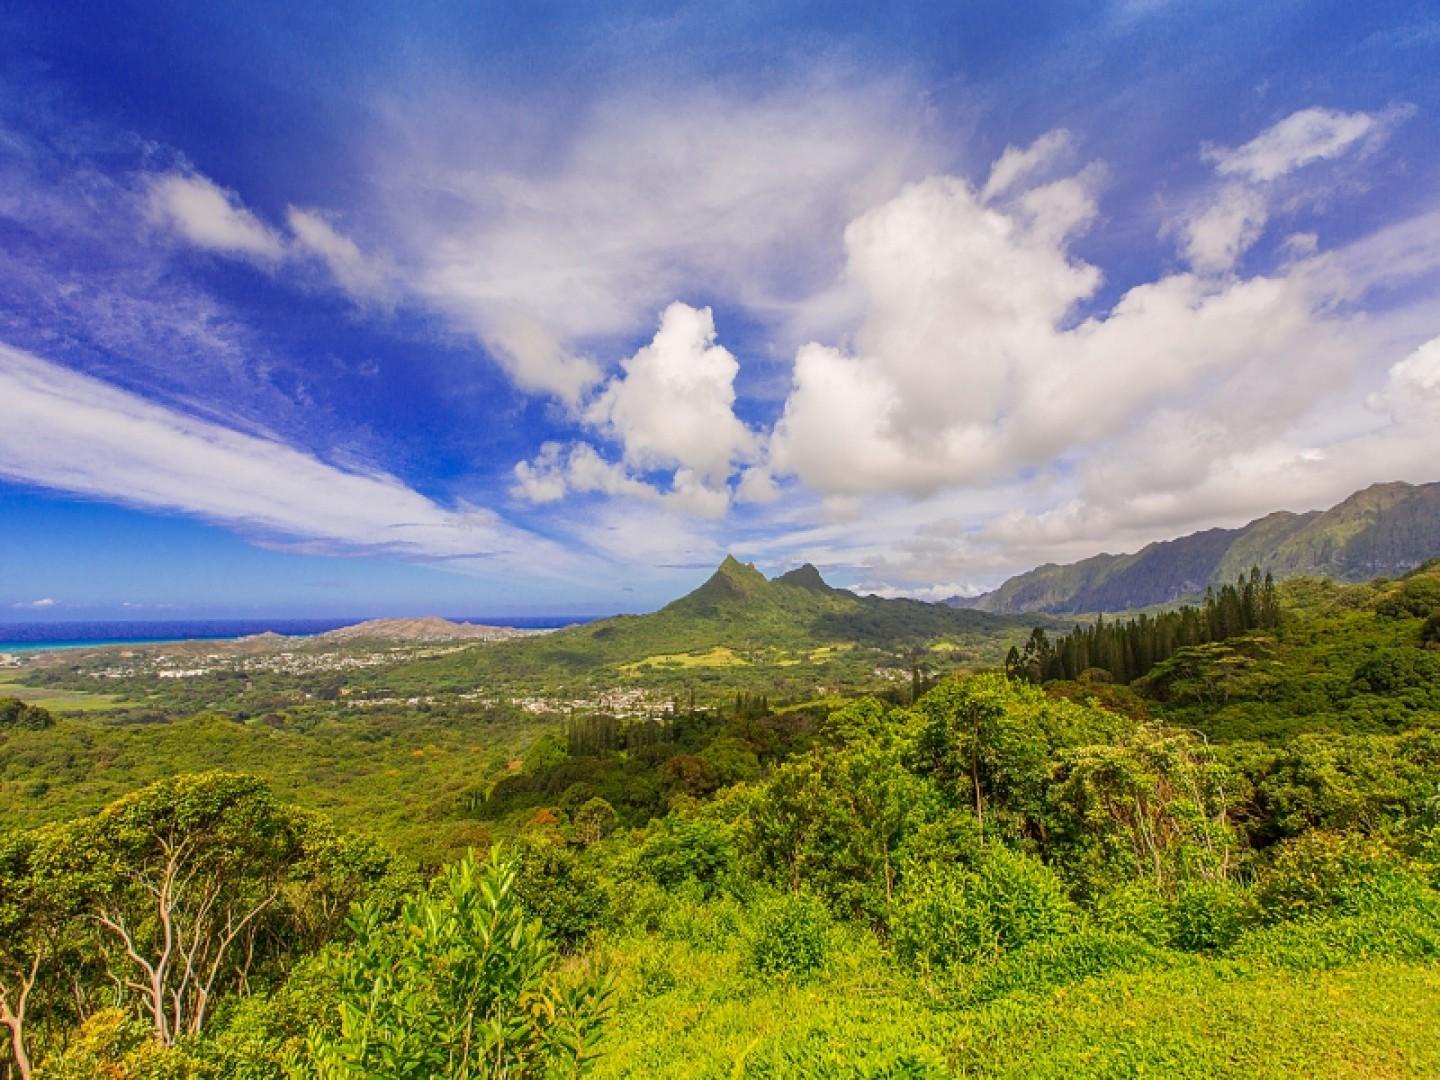 Kailua Vacation Rentals, Lanikai Ohana Hale - The beautiful windward side of the island!